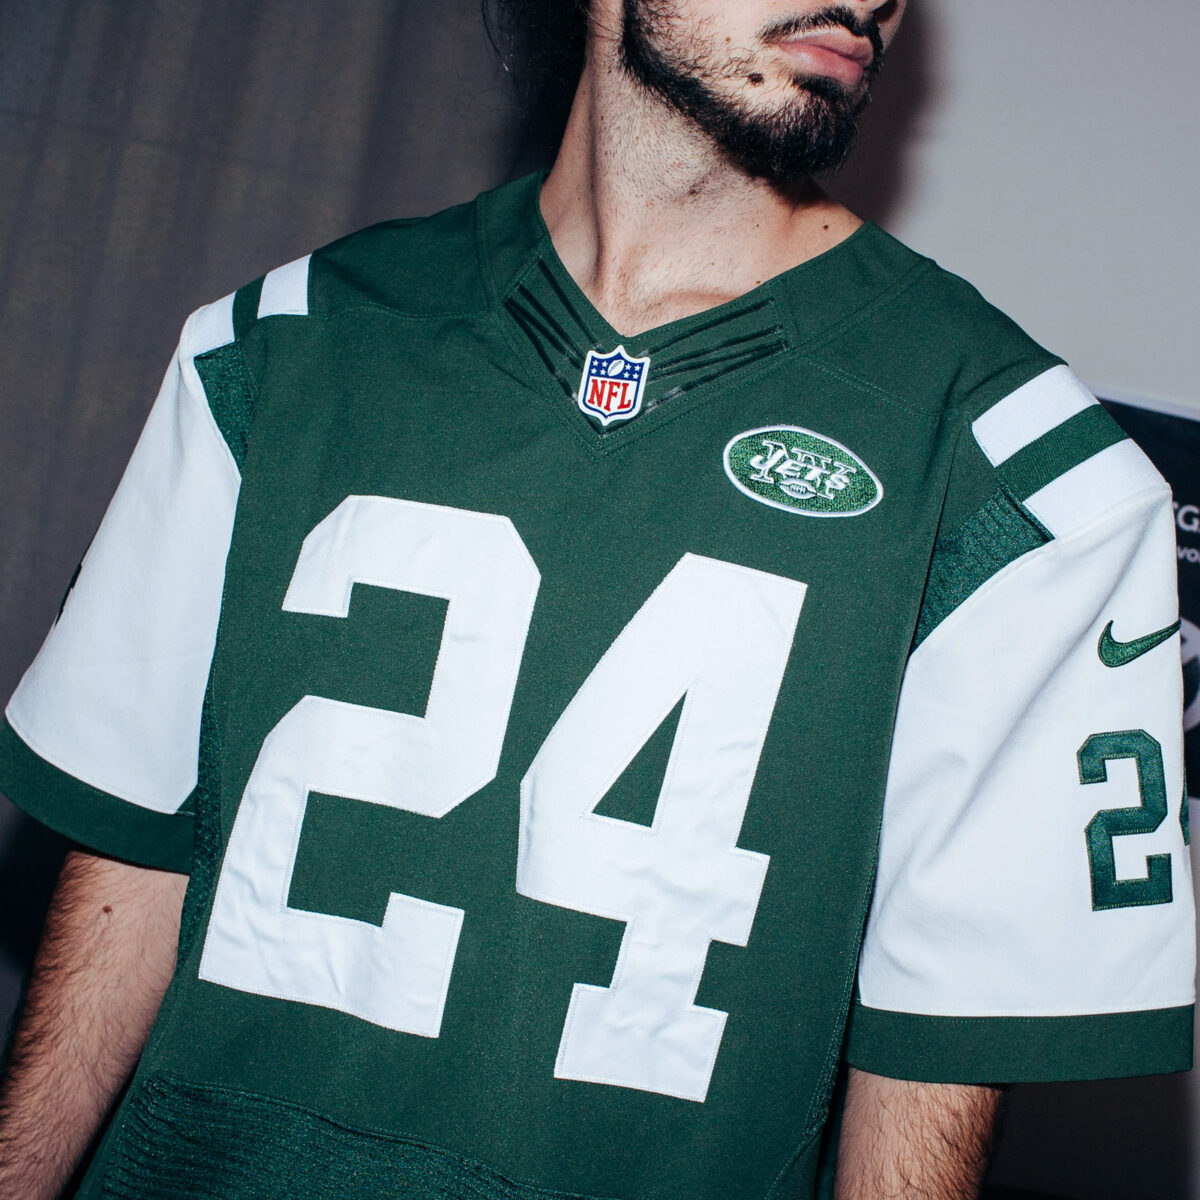 Nike NFL New York Jets 24 Revis Elite Jersey kaufen